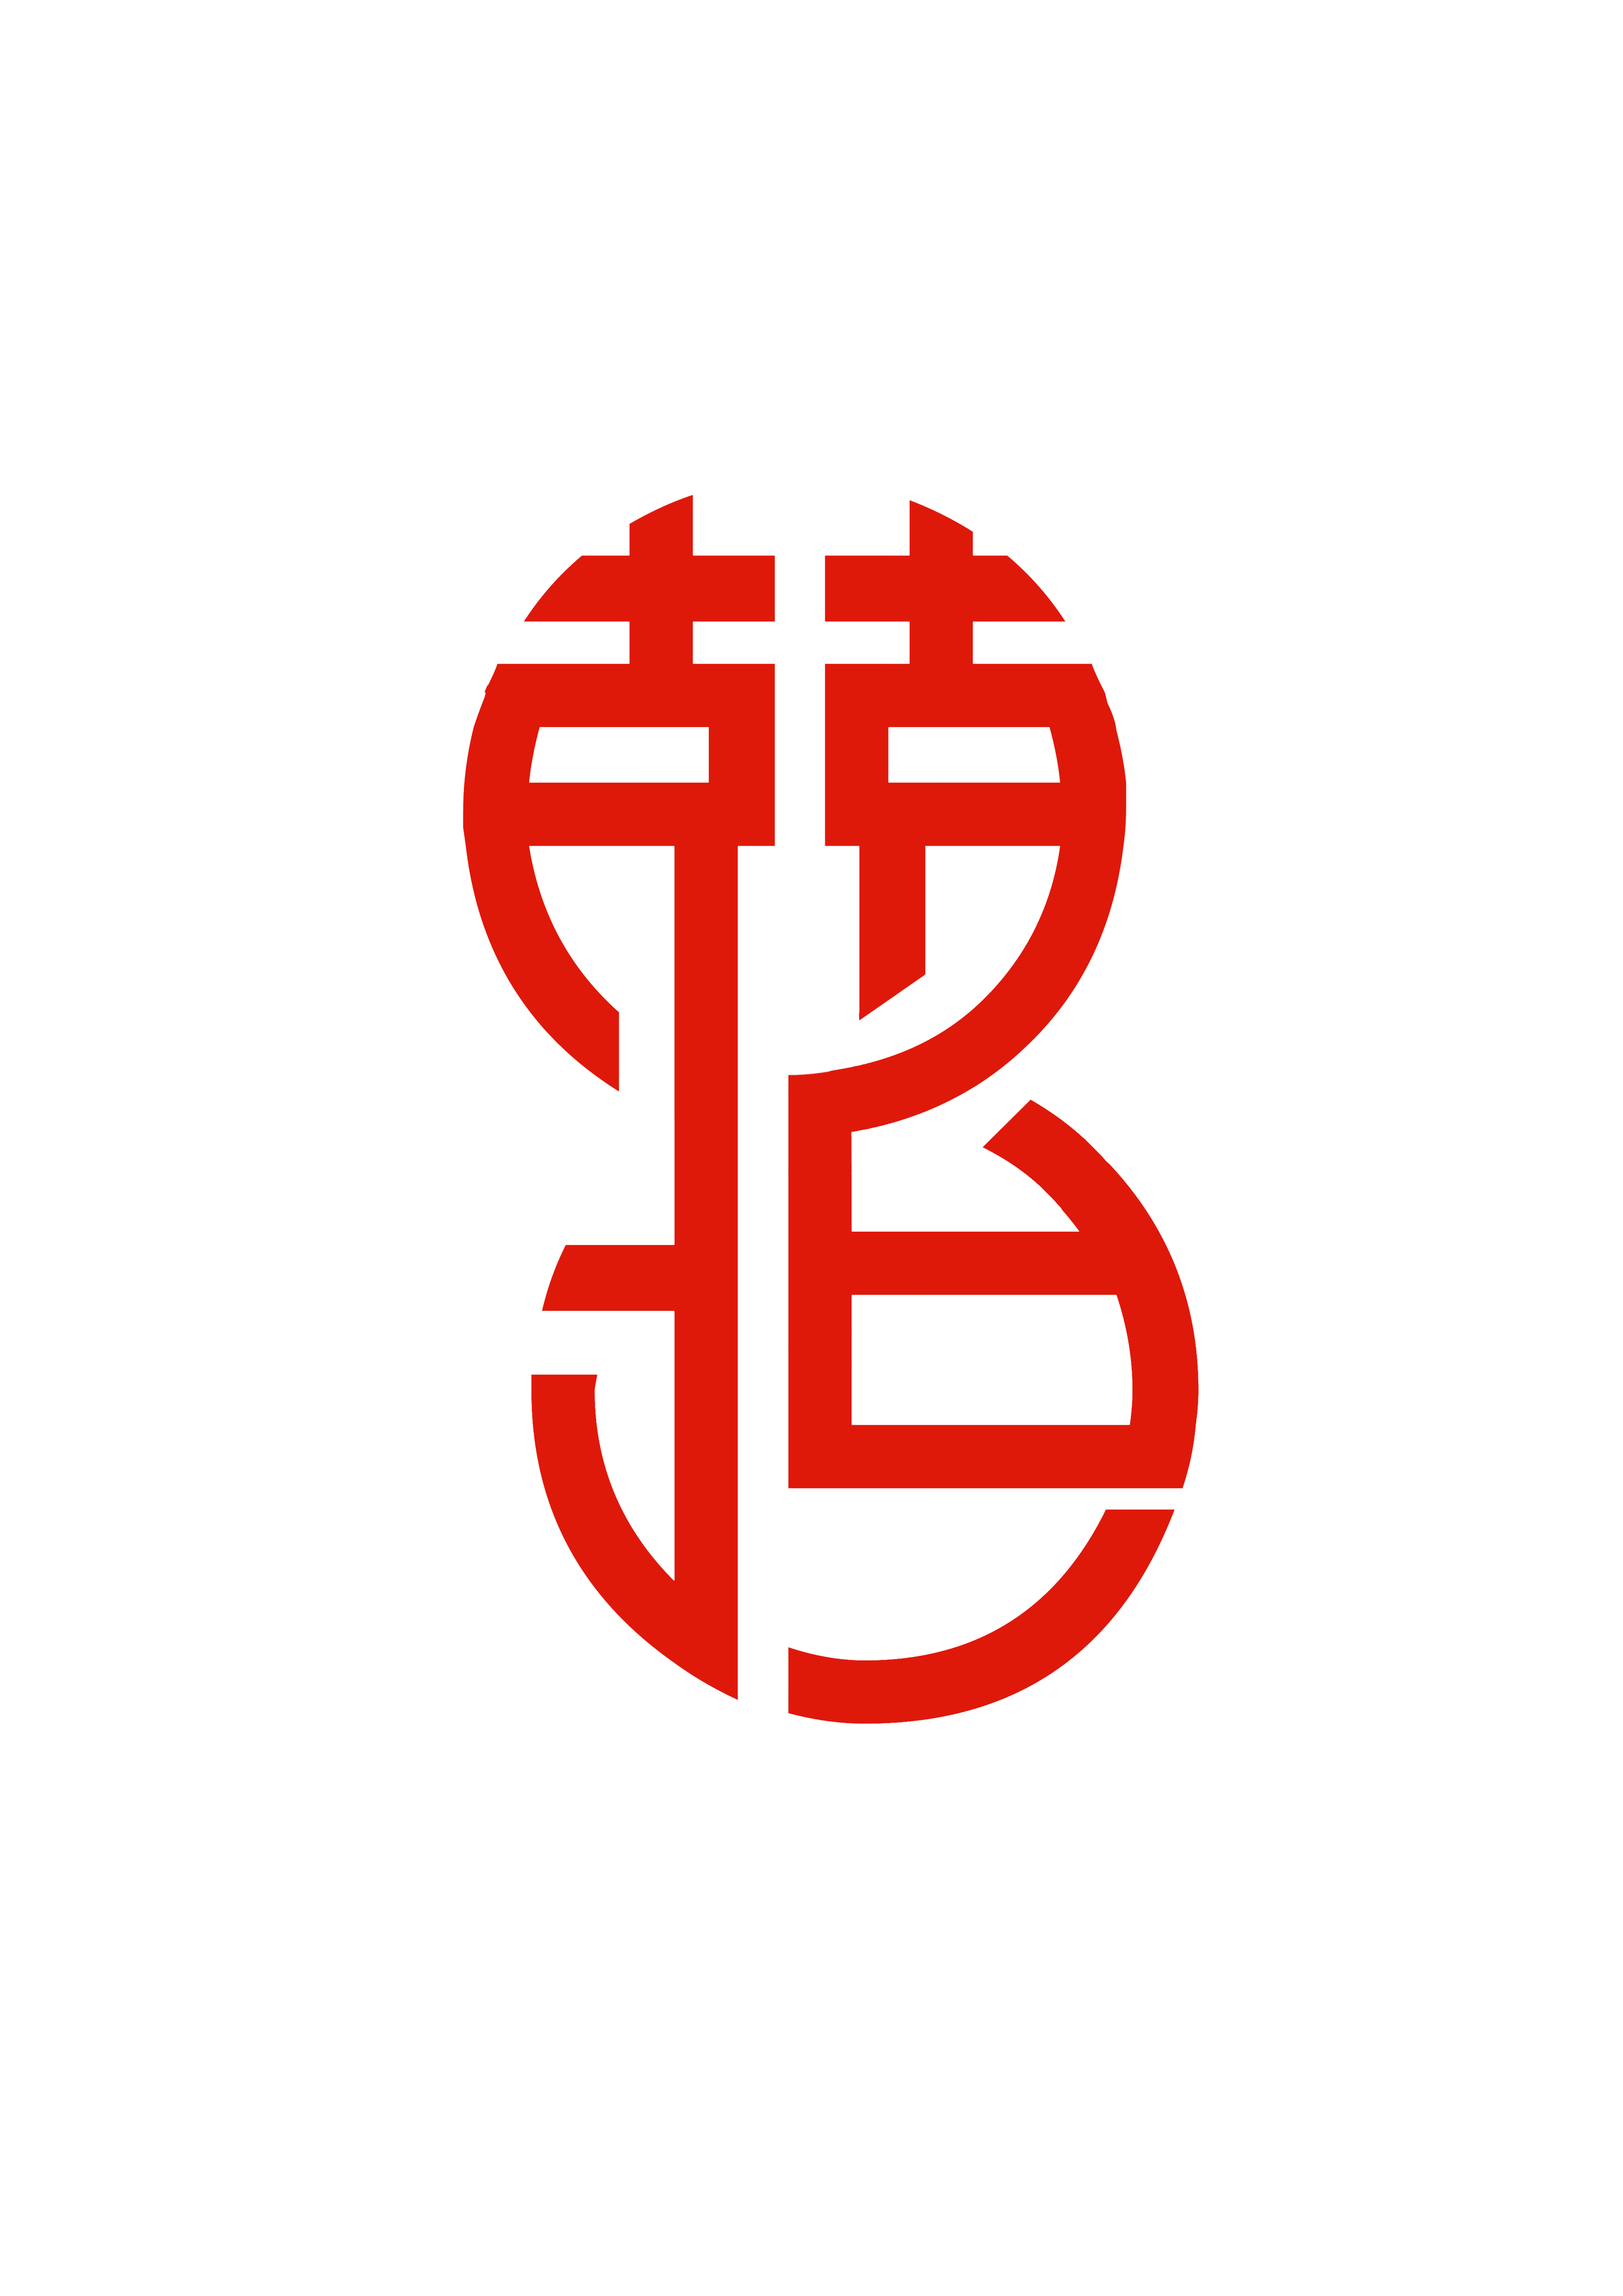 GENTON Fluid Technology (Shanghai) Co., Ltd